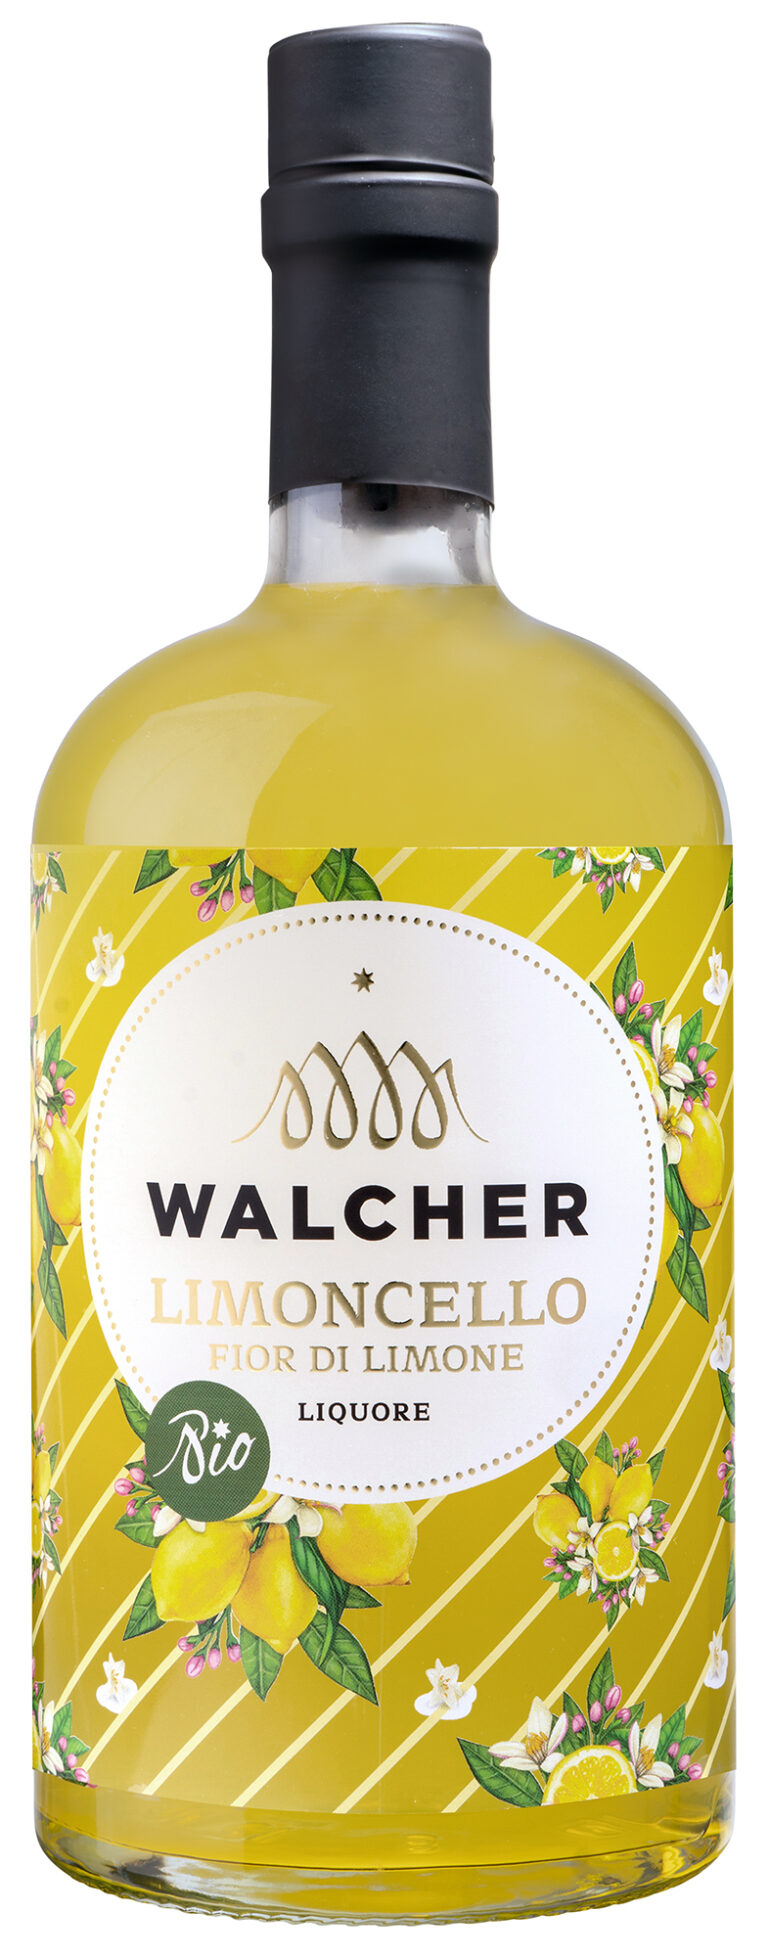 Se Limoncello - Limoncello Fior di Limone 15% Øko Walcher hos Falkensten Vin